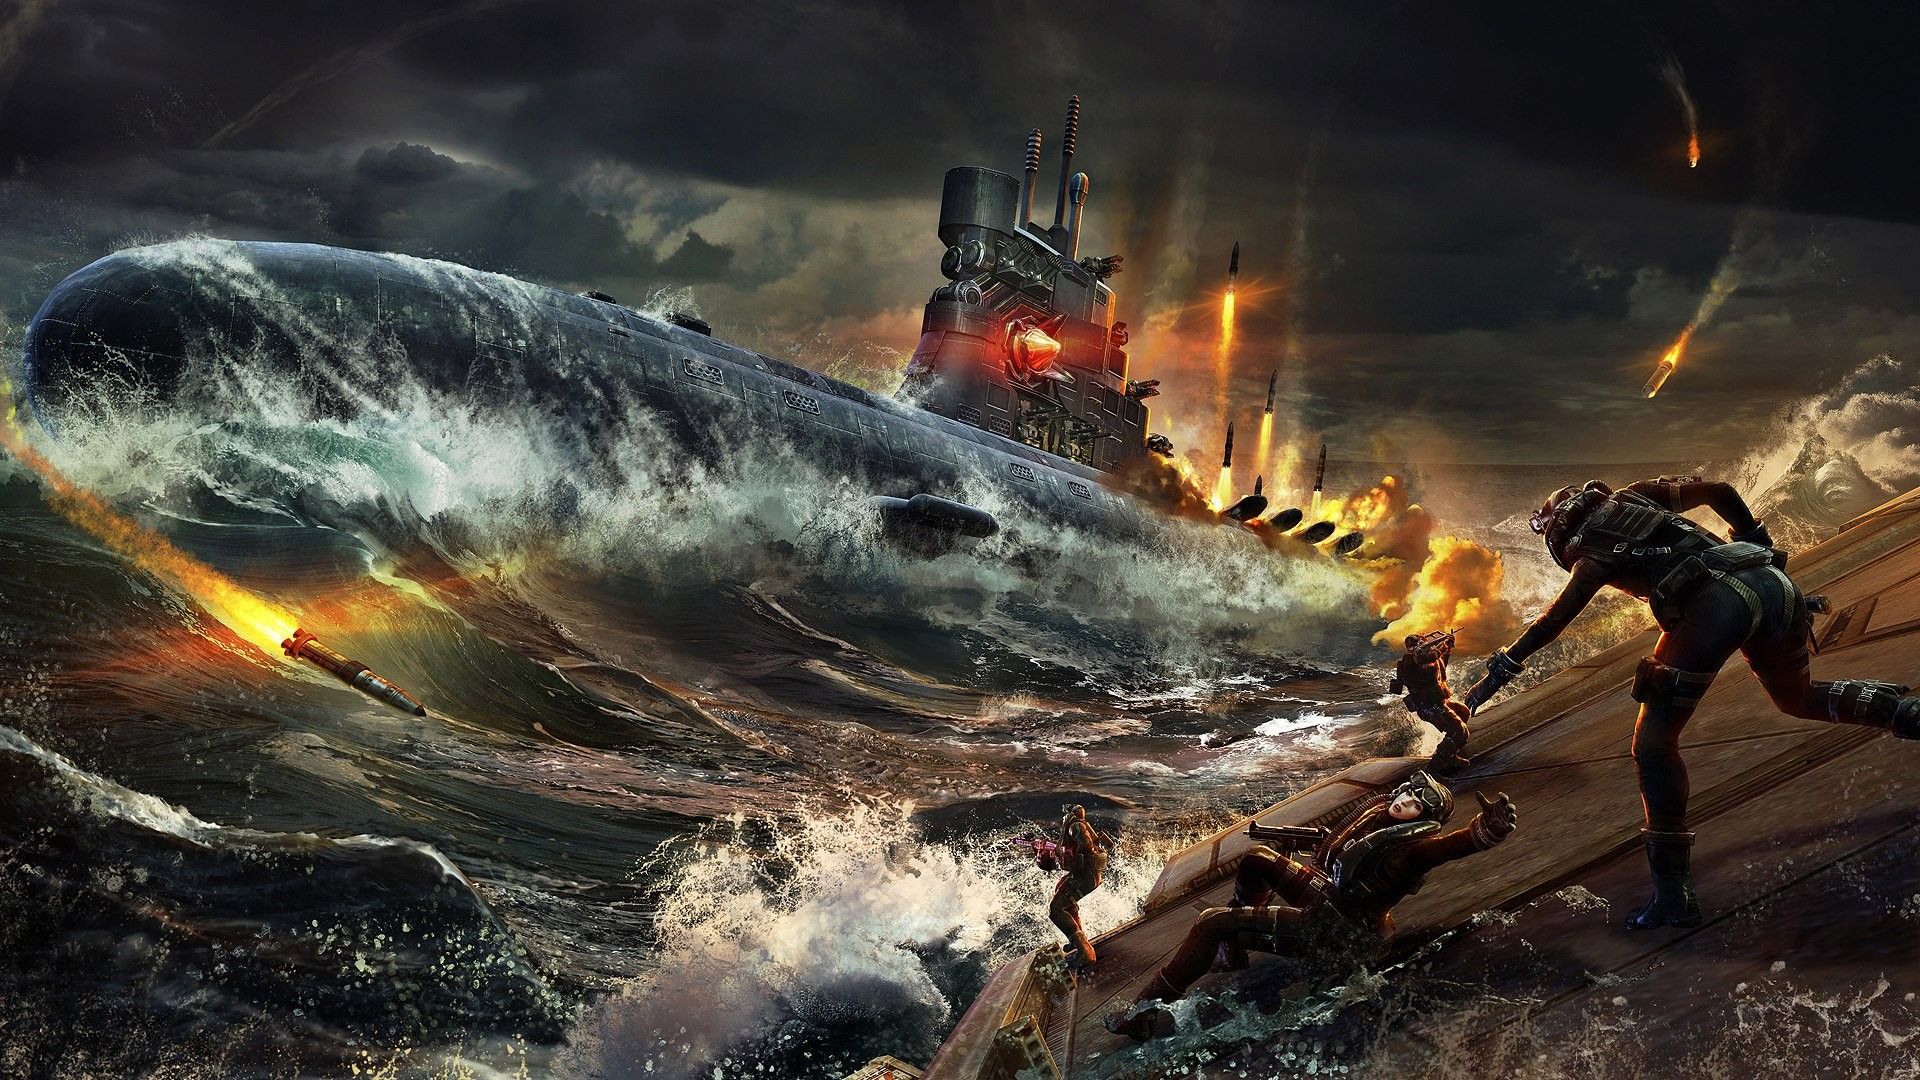 Cqc Submarine Battle Dreamscapes Video Game Art Online Image